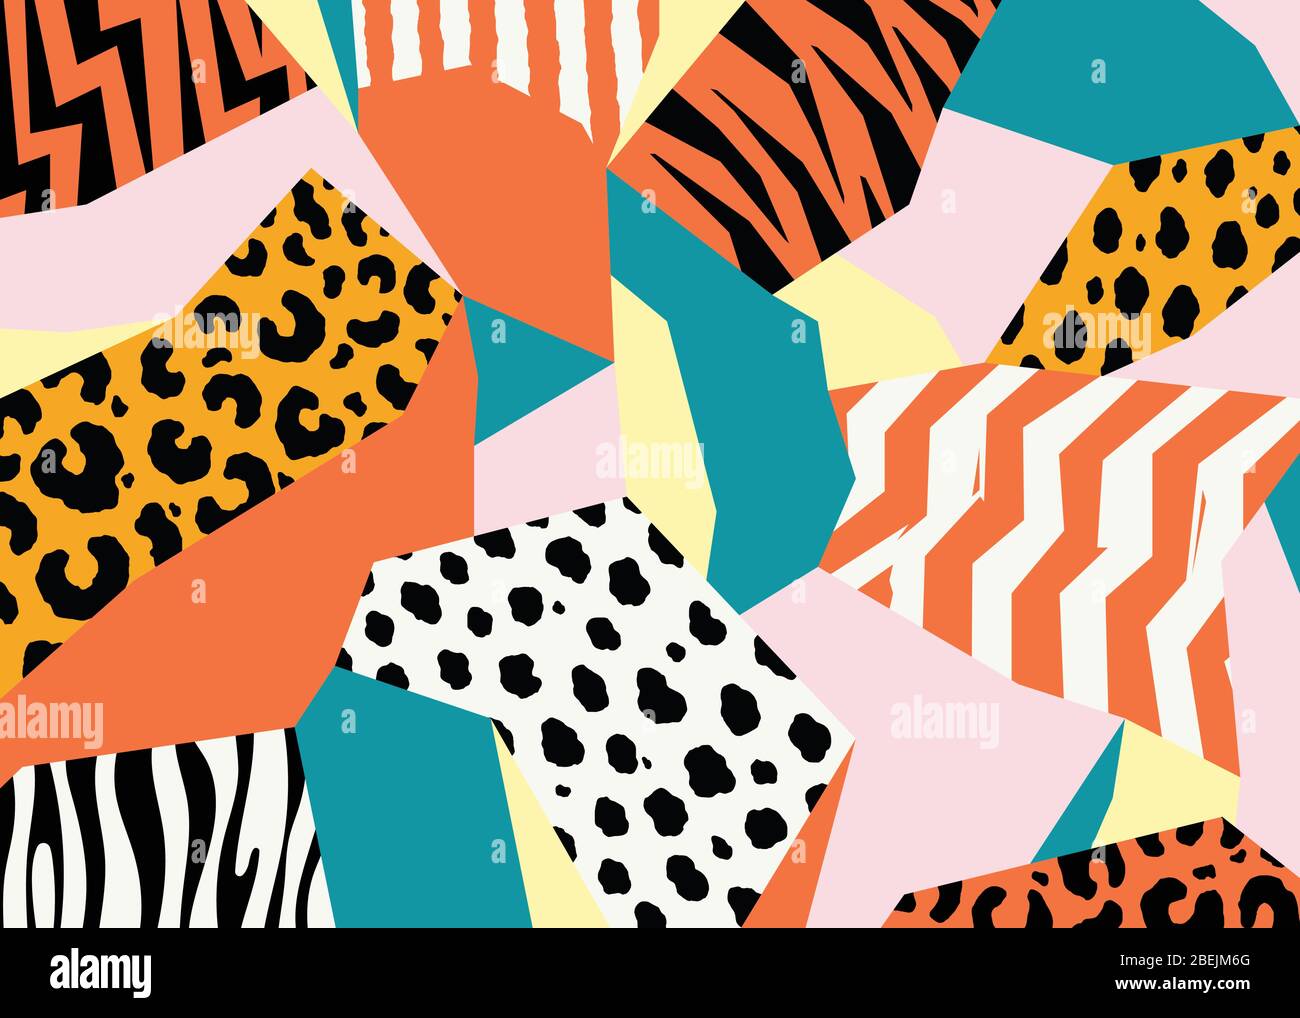 https://c8.alamy.com/comp/2BEJM6G/abstract-animal-print-background-hand-drawn-vector-illustration-pattern-for-fashion-textile-web-print-surface-design-2BEJM6G.jpg